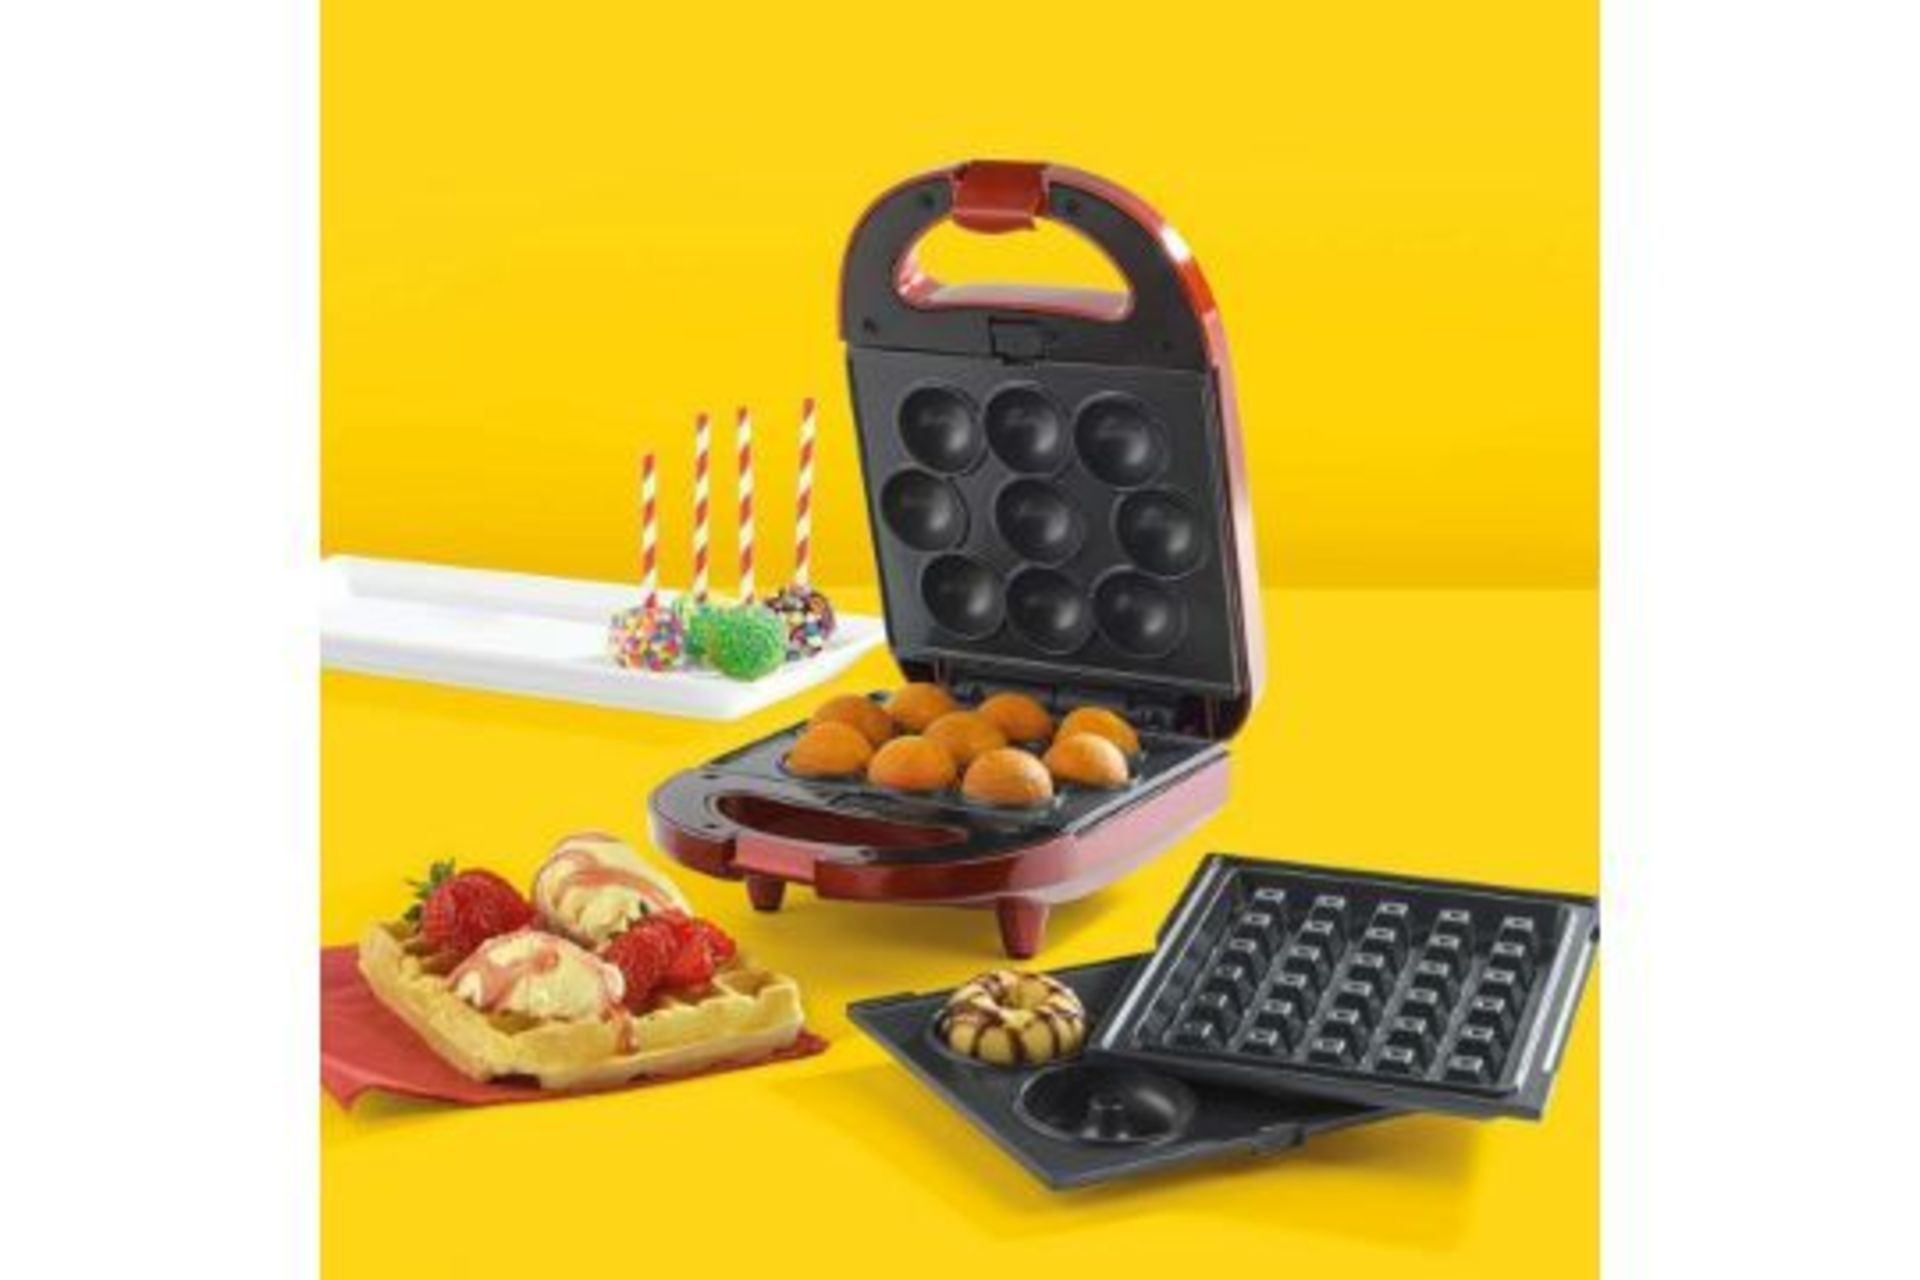 New Giles & Posner 3 in 1 Treat Maker Doughnut Cake Pop & Waffle Maker - RRP £39.98 - Image 3 of 3